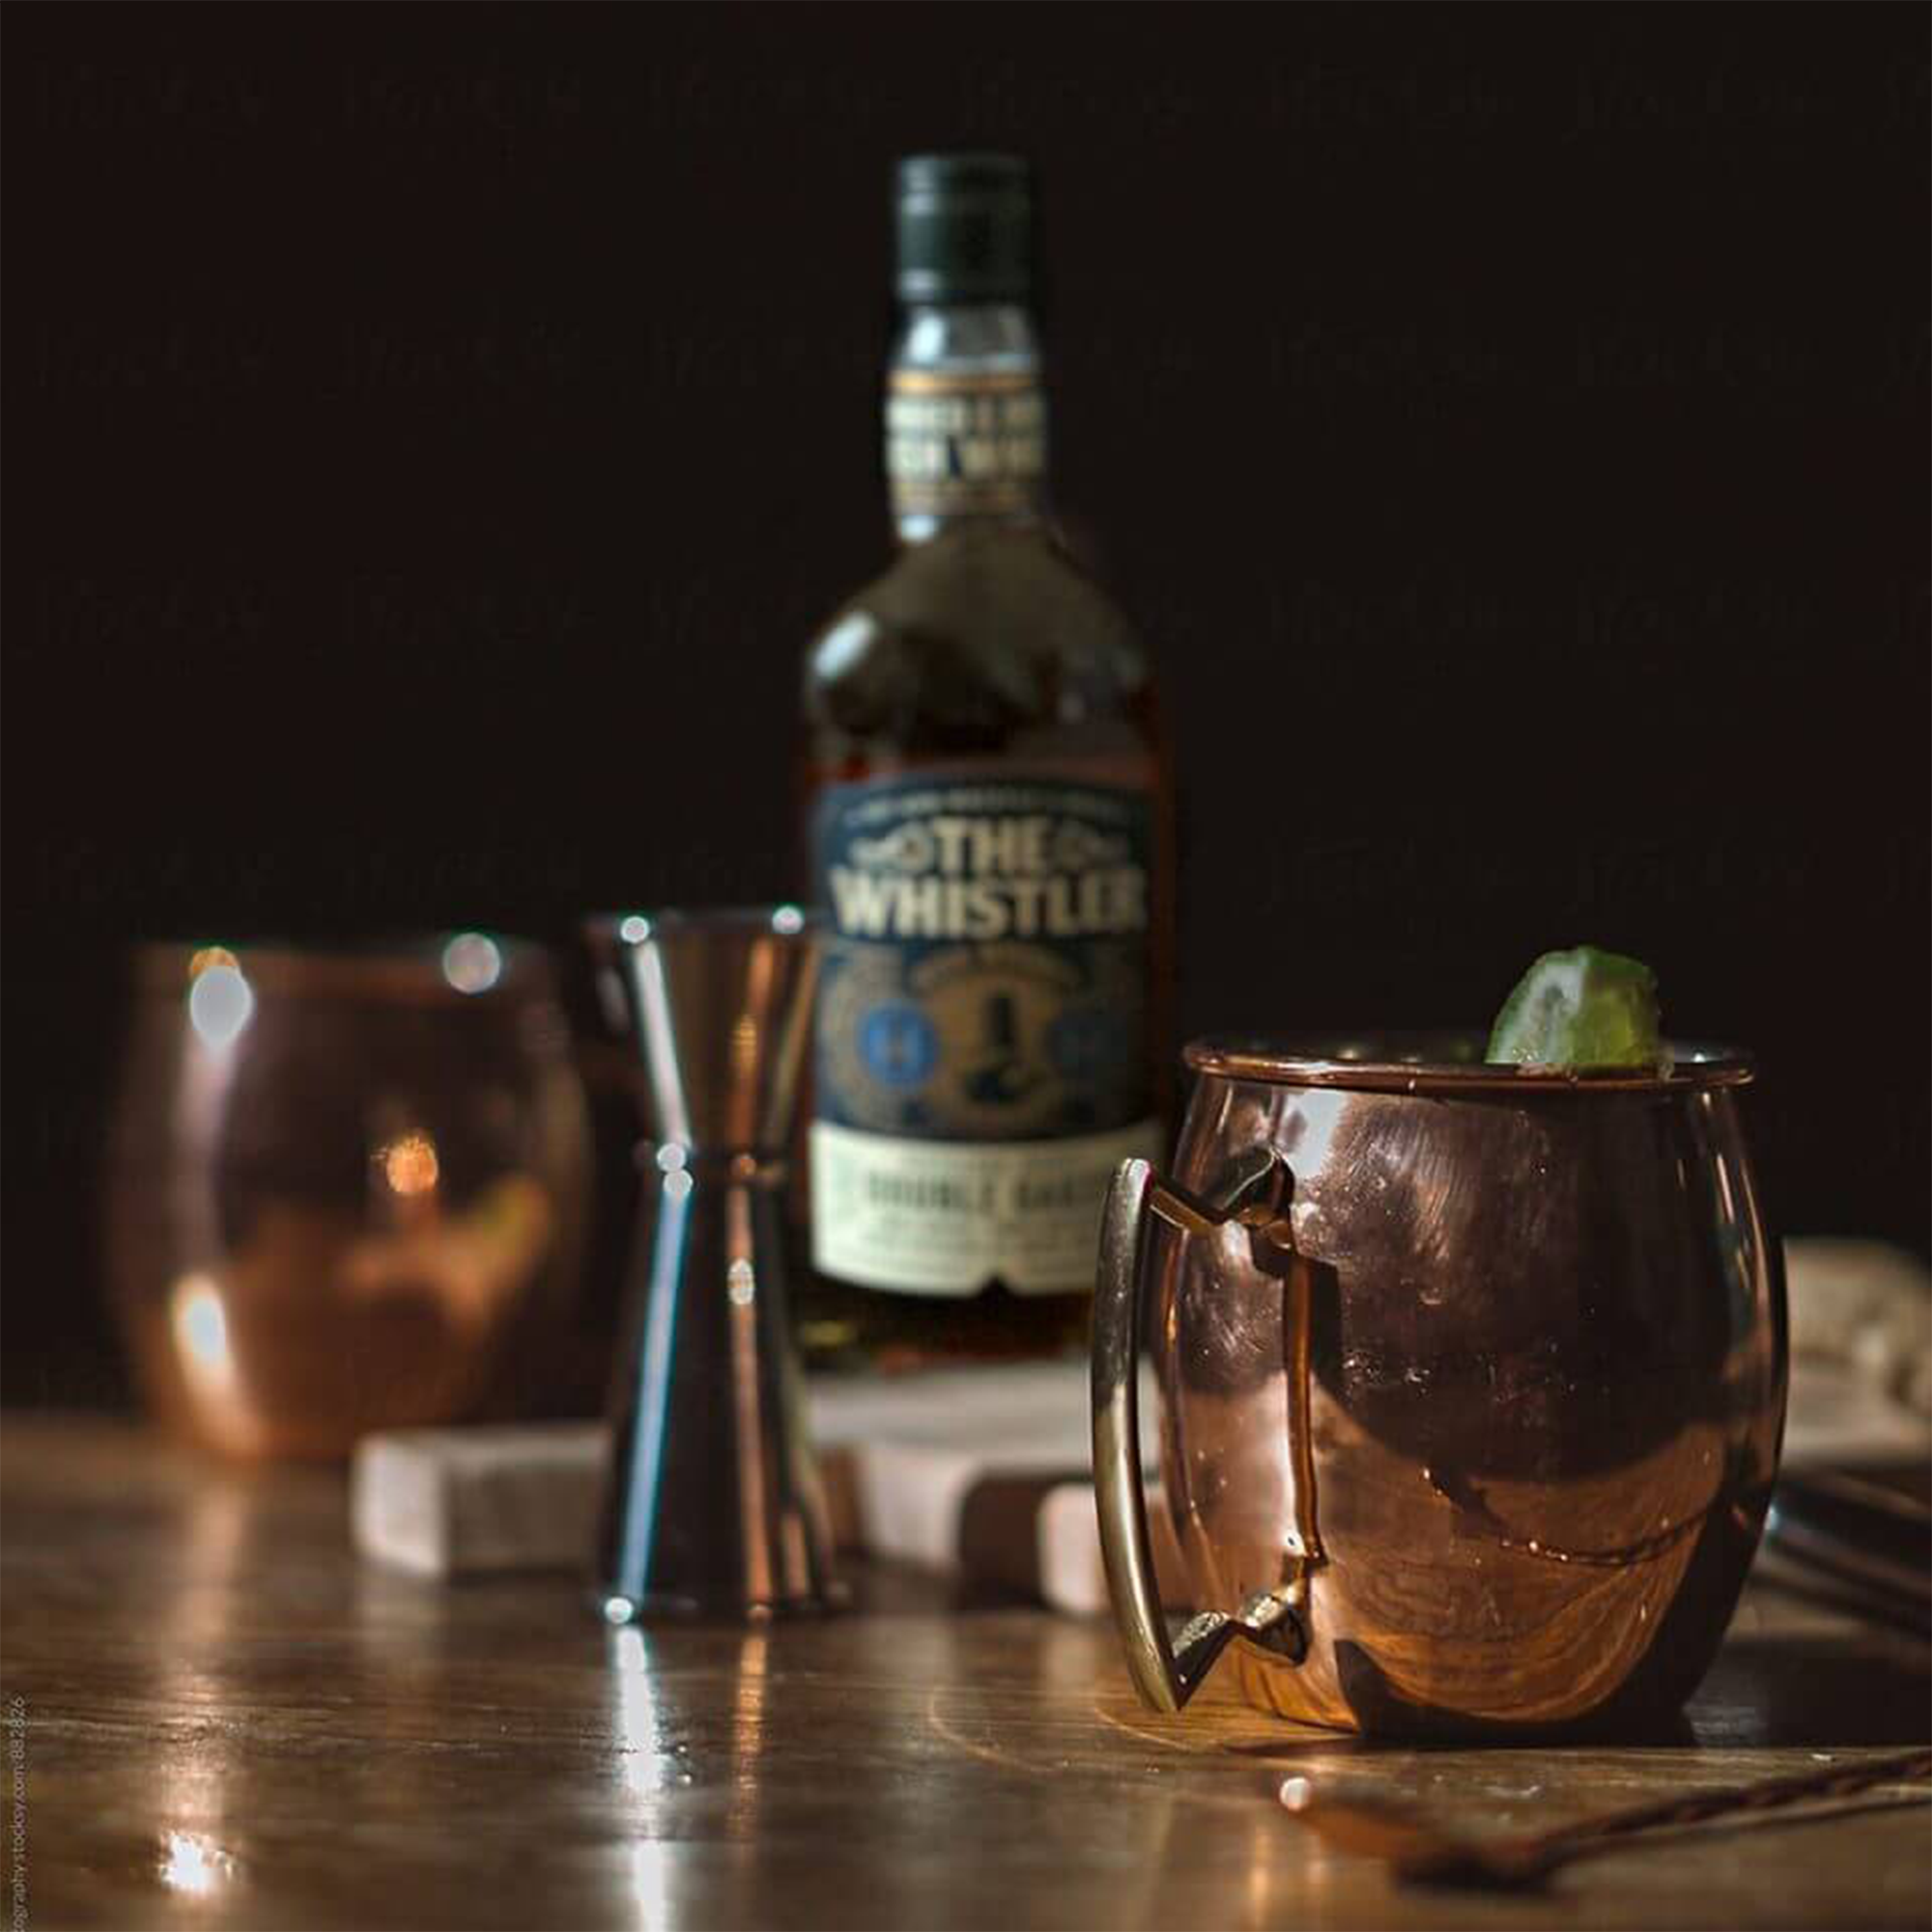 The Whistler Imperial Stout Cask Irish Whiskey